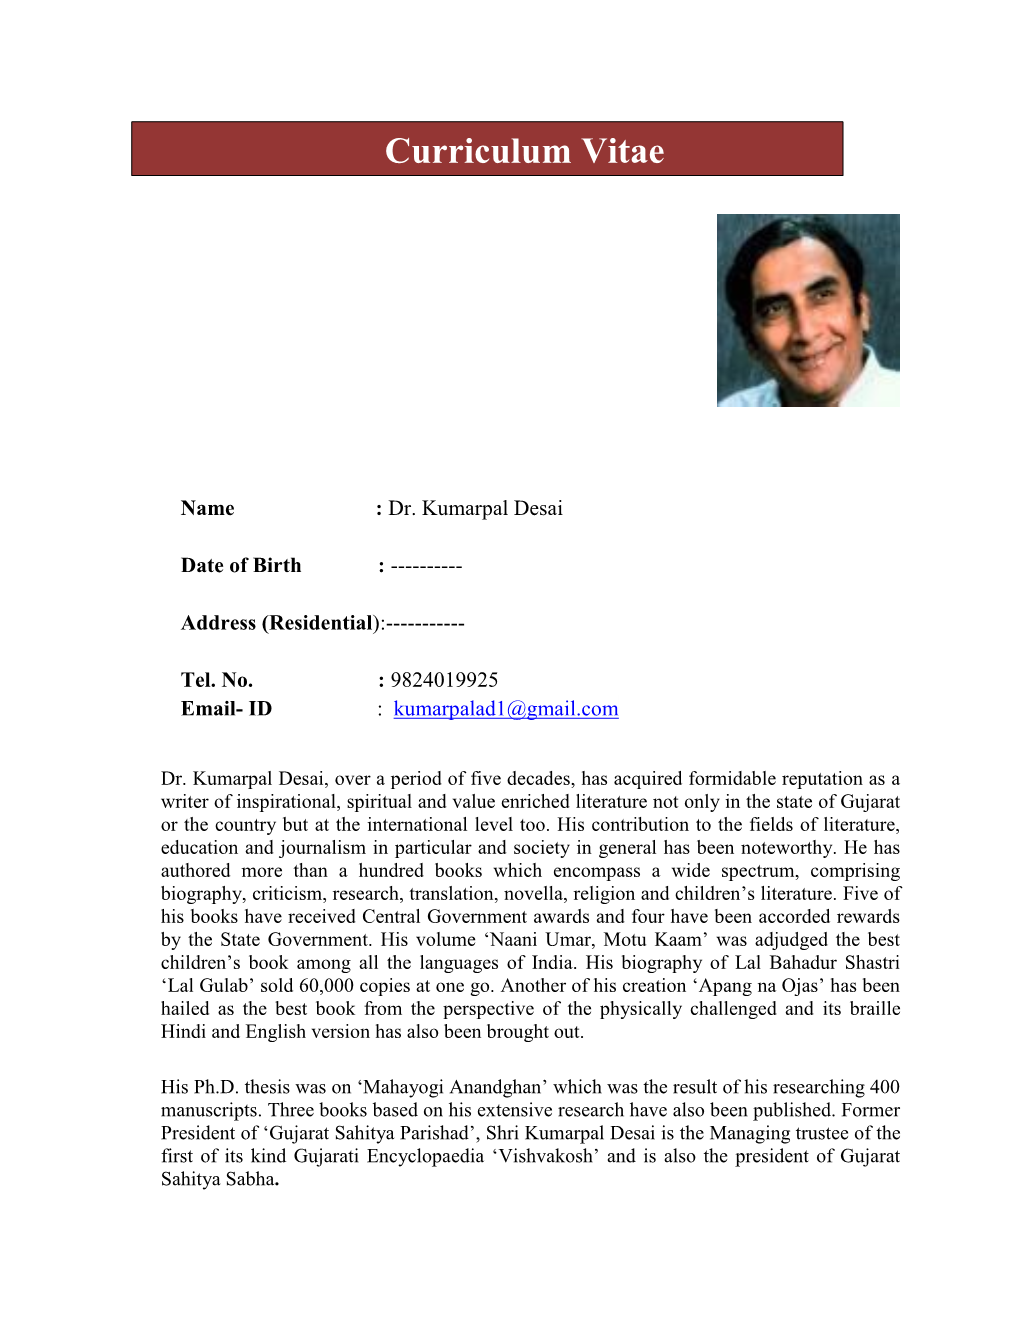 Curriculum Vitae of Dr. Kumarpal Desai.Pdf